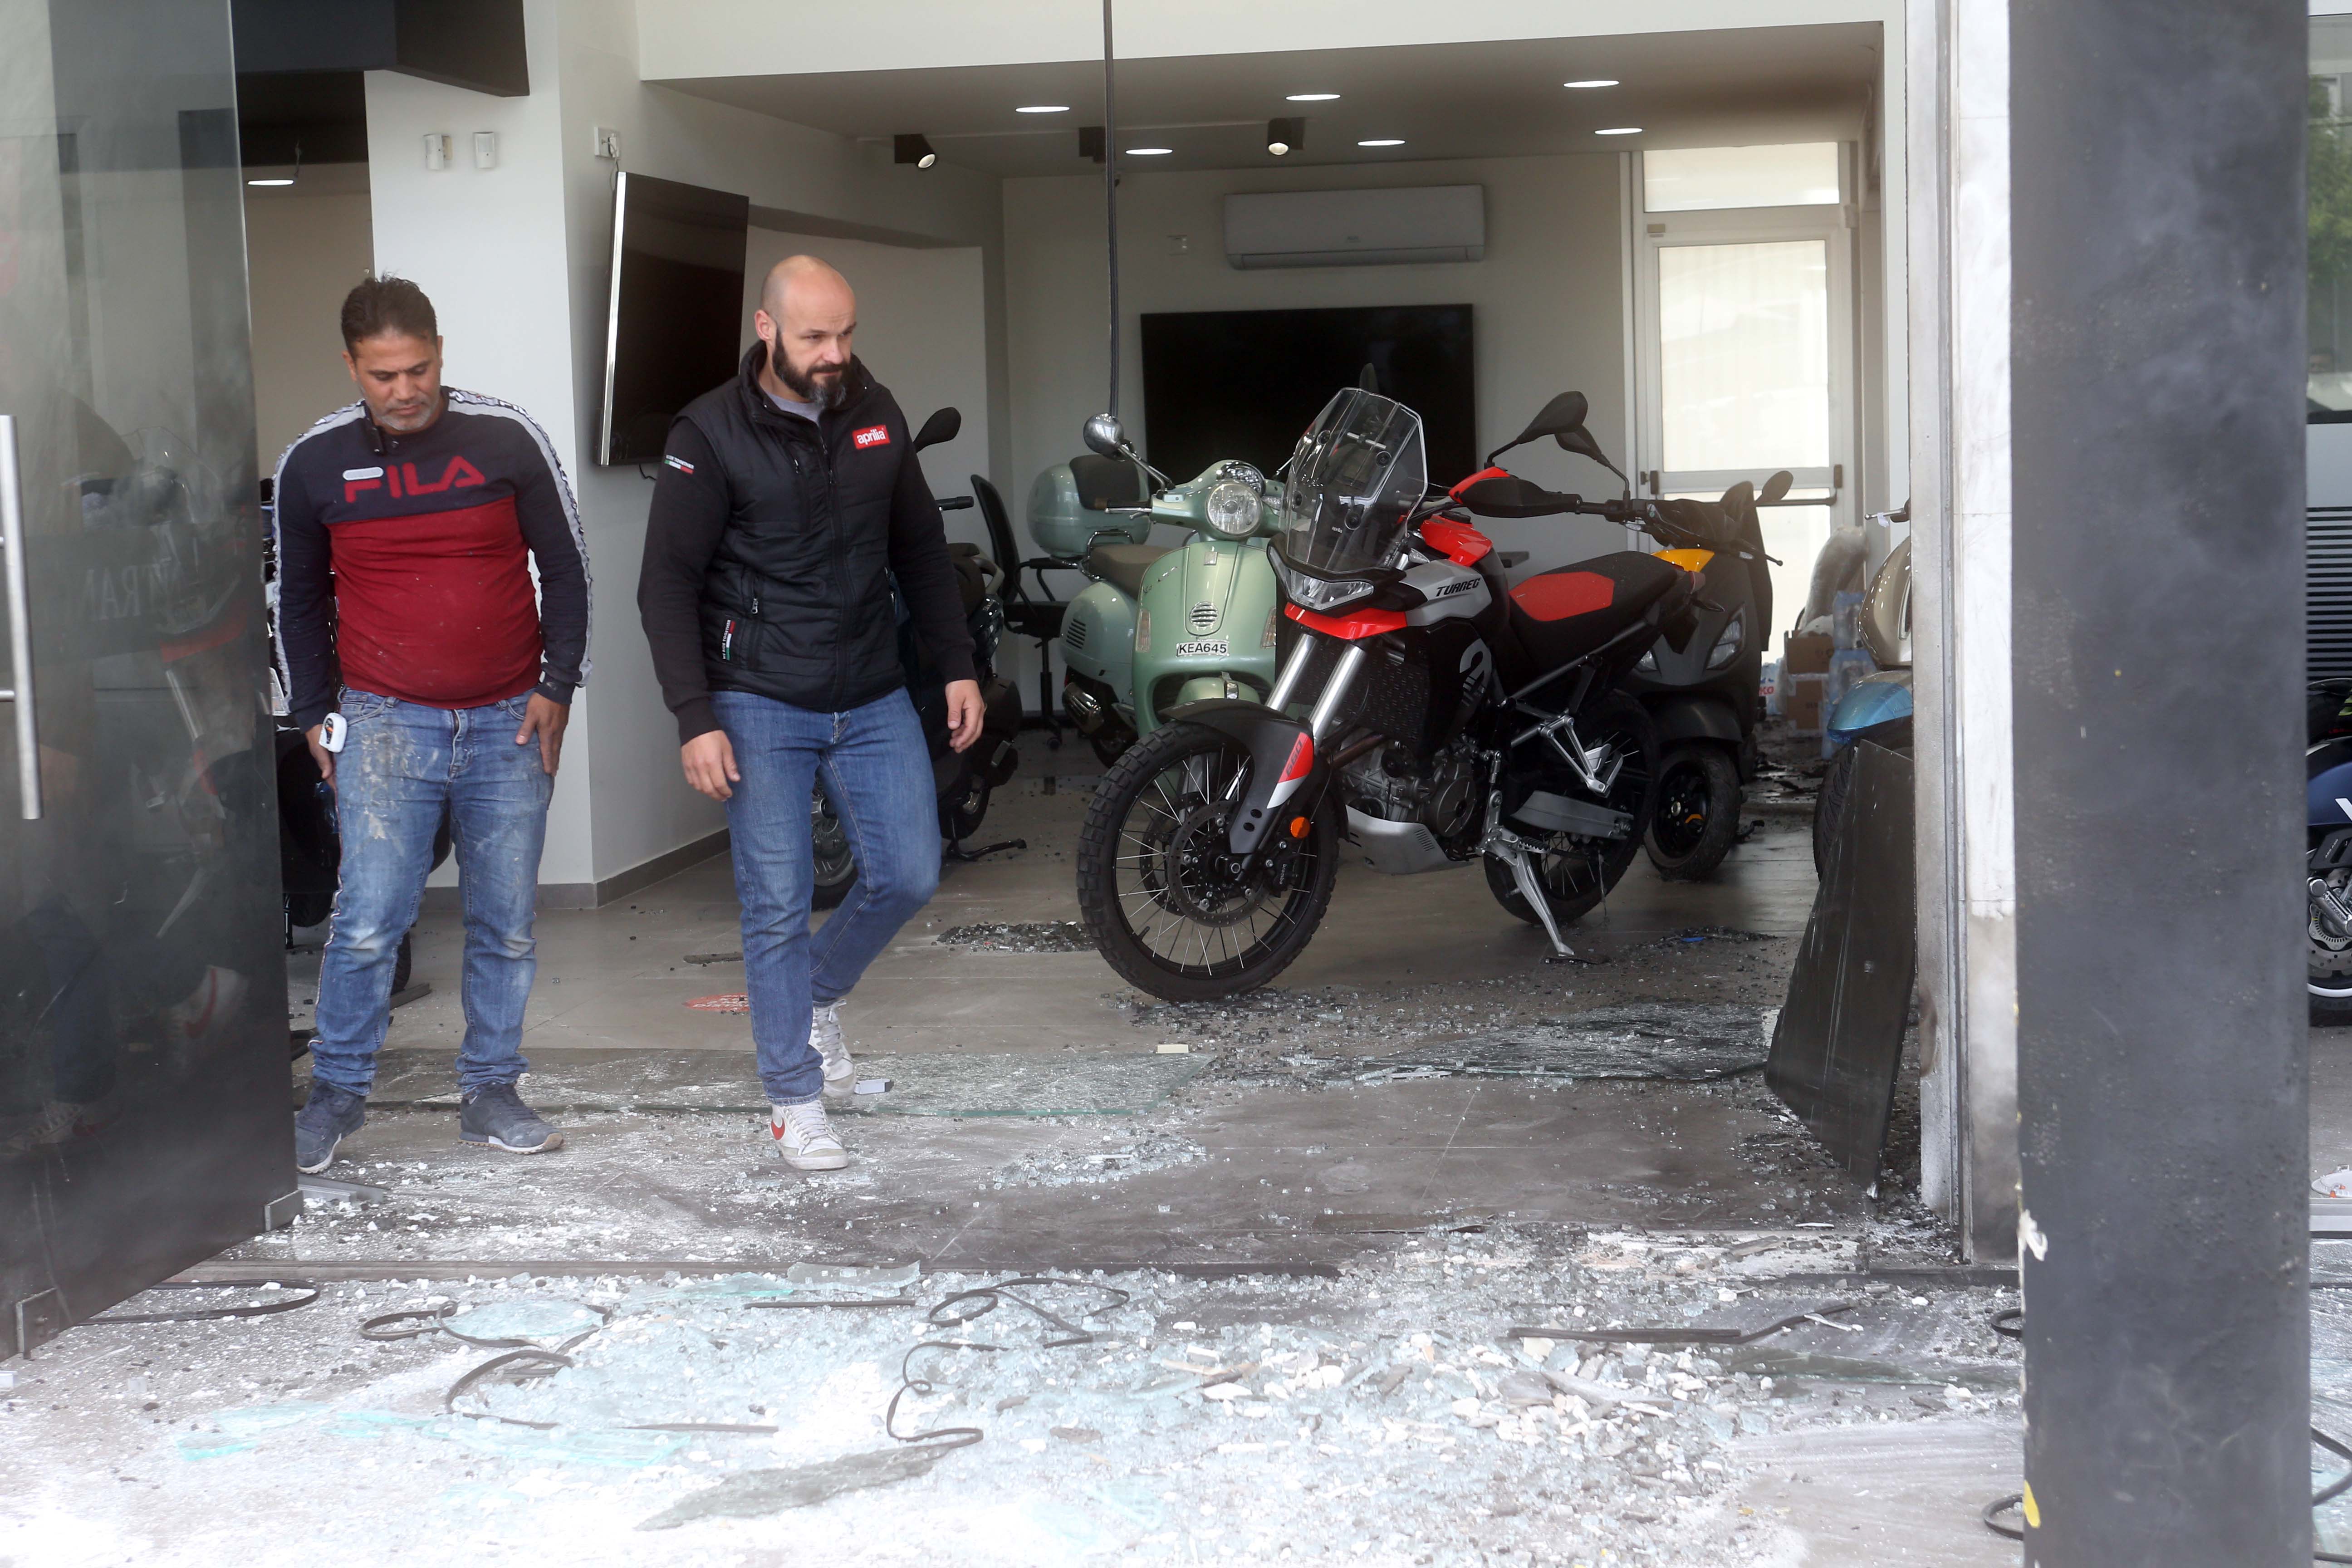 image Explosion at motorbike shop